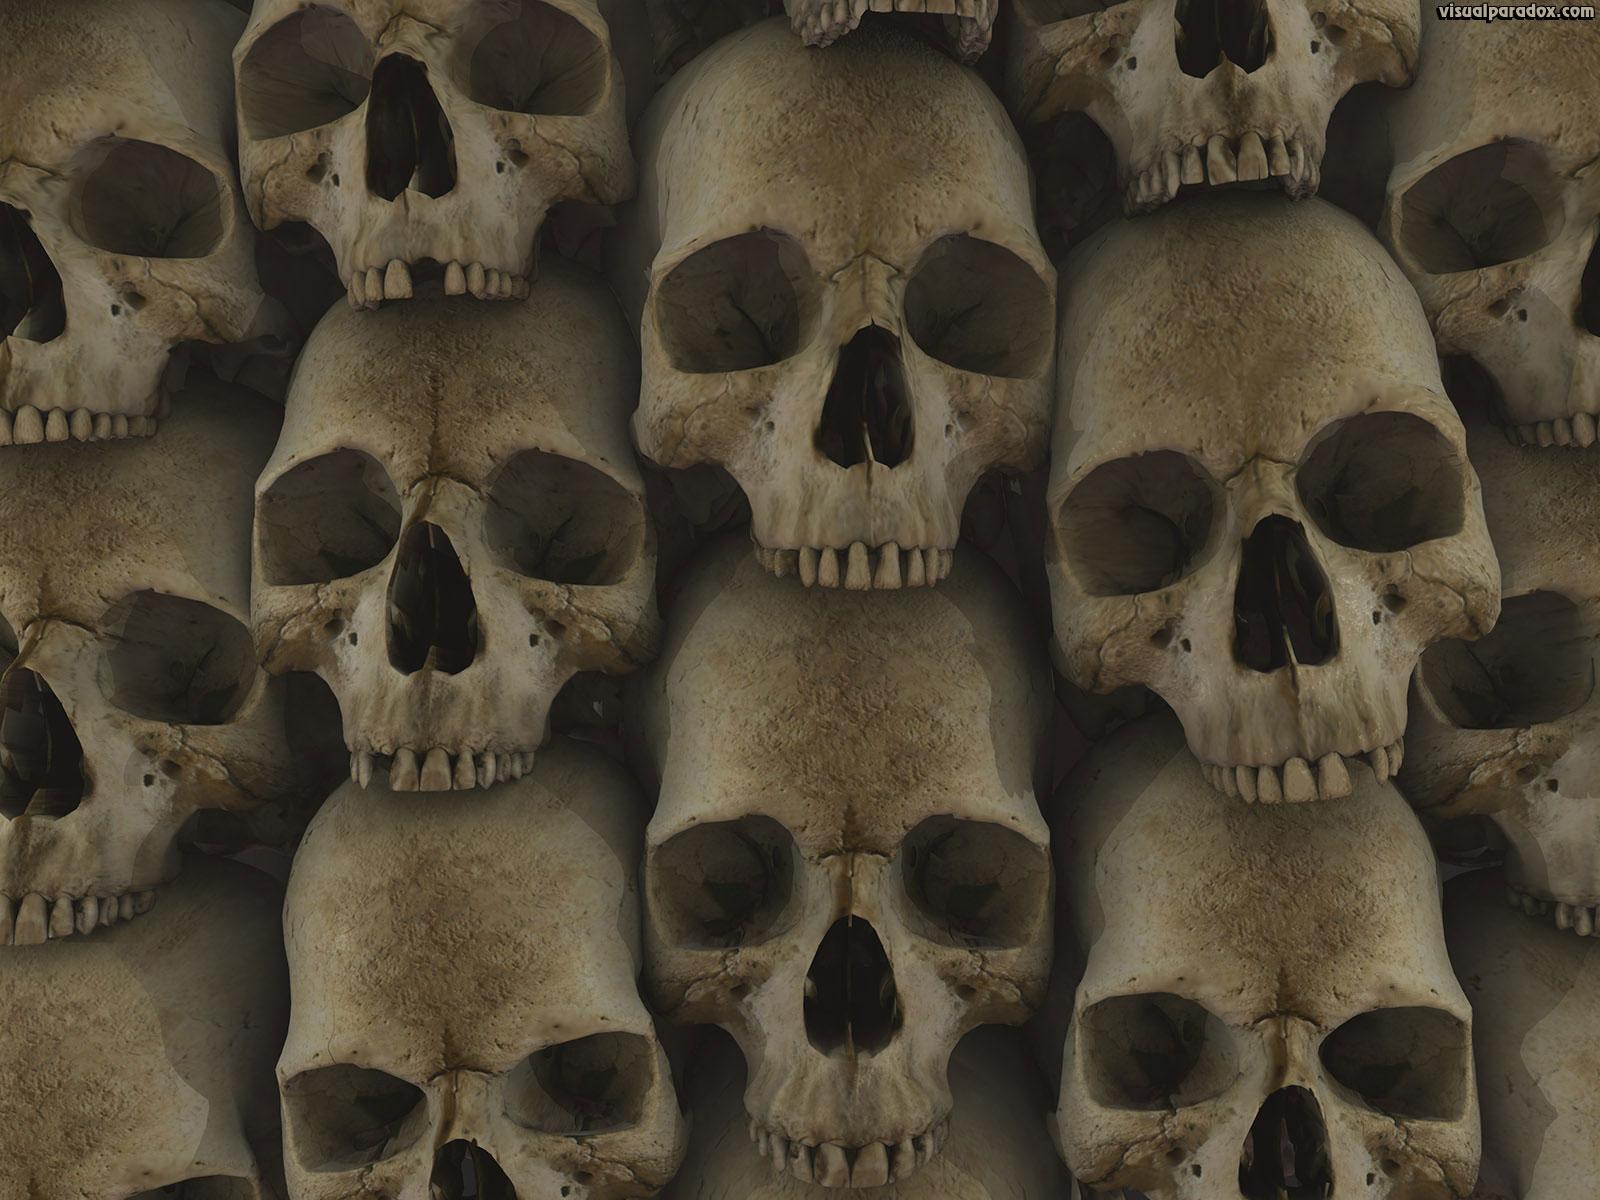 Calaveras. Skeletons and skulls